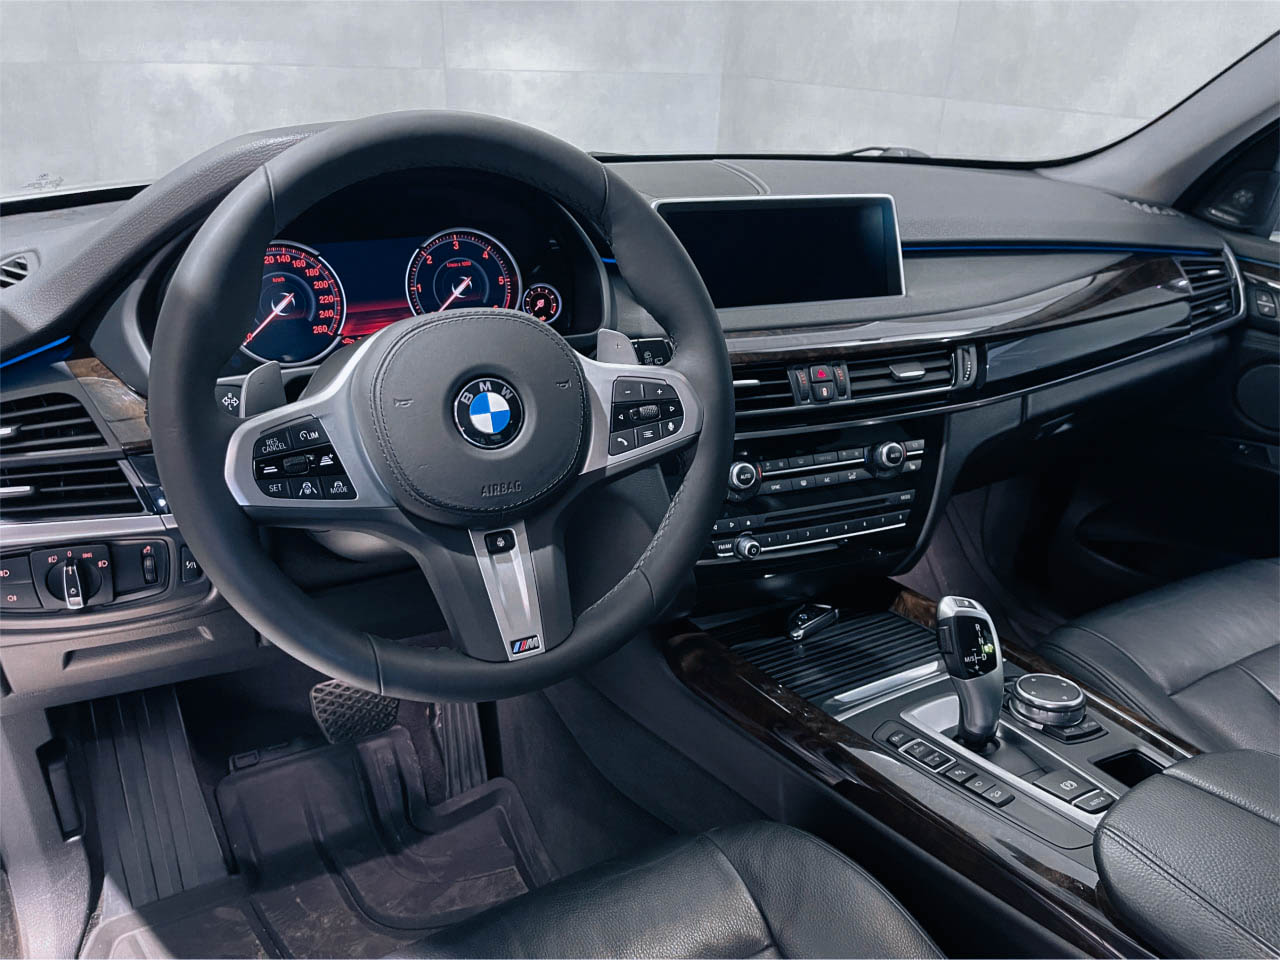 BMW Gxx Steering Wheel to Fxx Retrofit Adapter